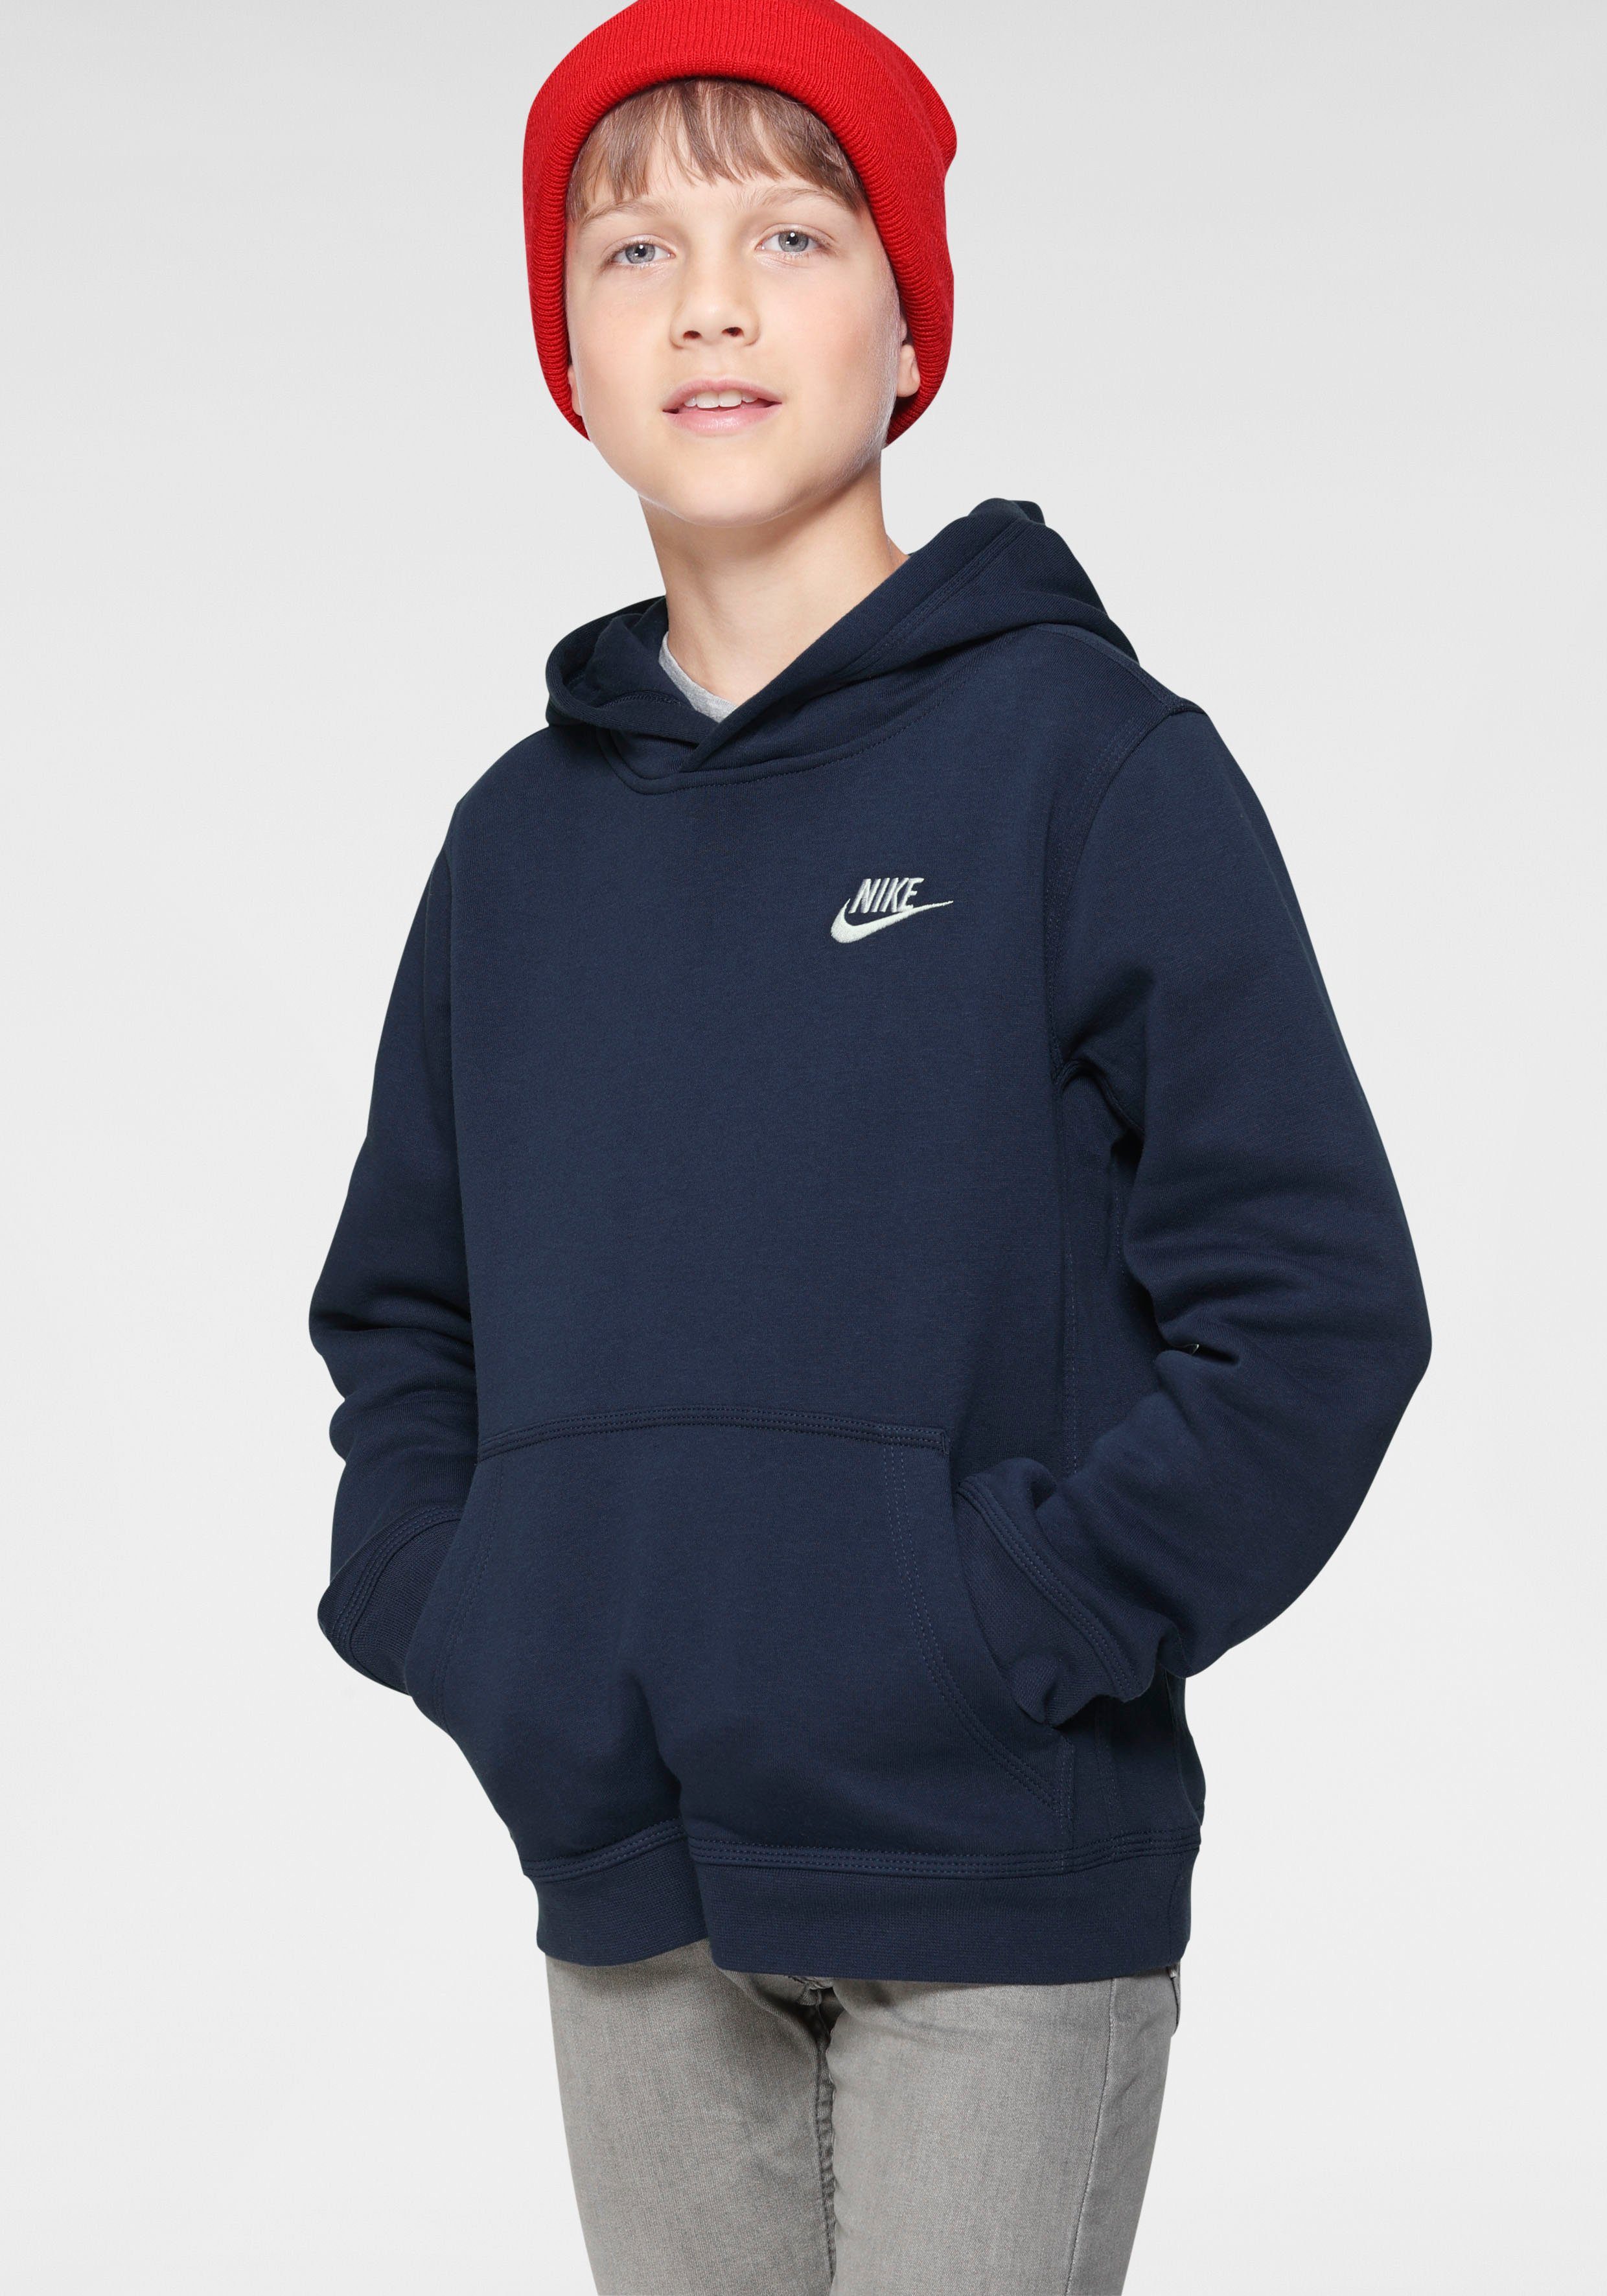 Hoodie Club Nike Kids' Kapuzensweatshirt Sportswear dunkelblau Big Pullover